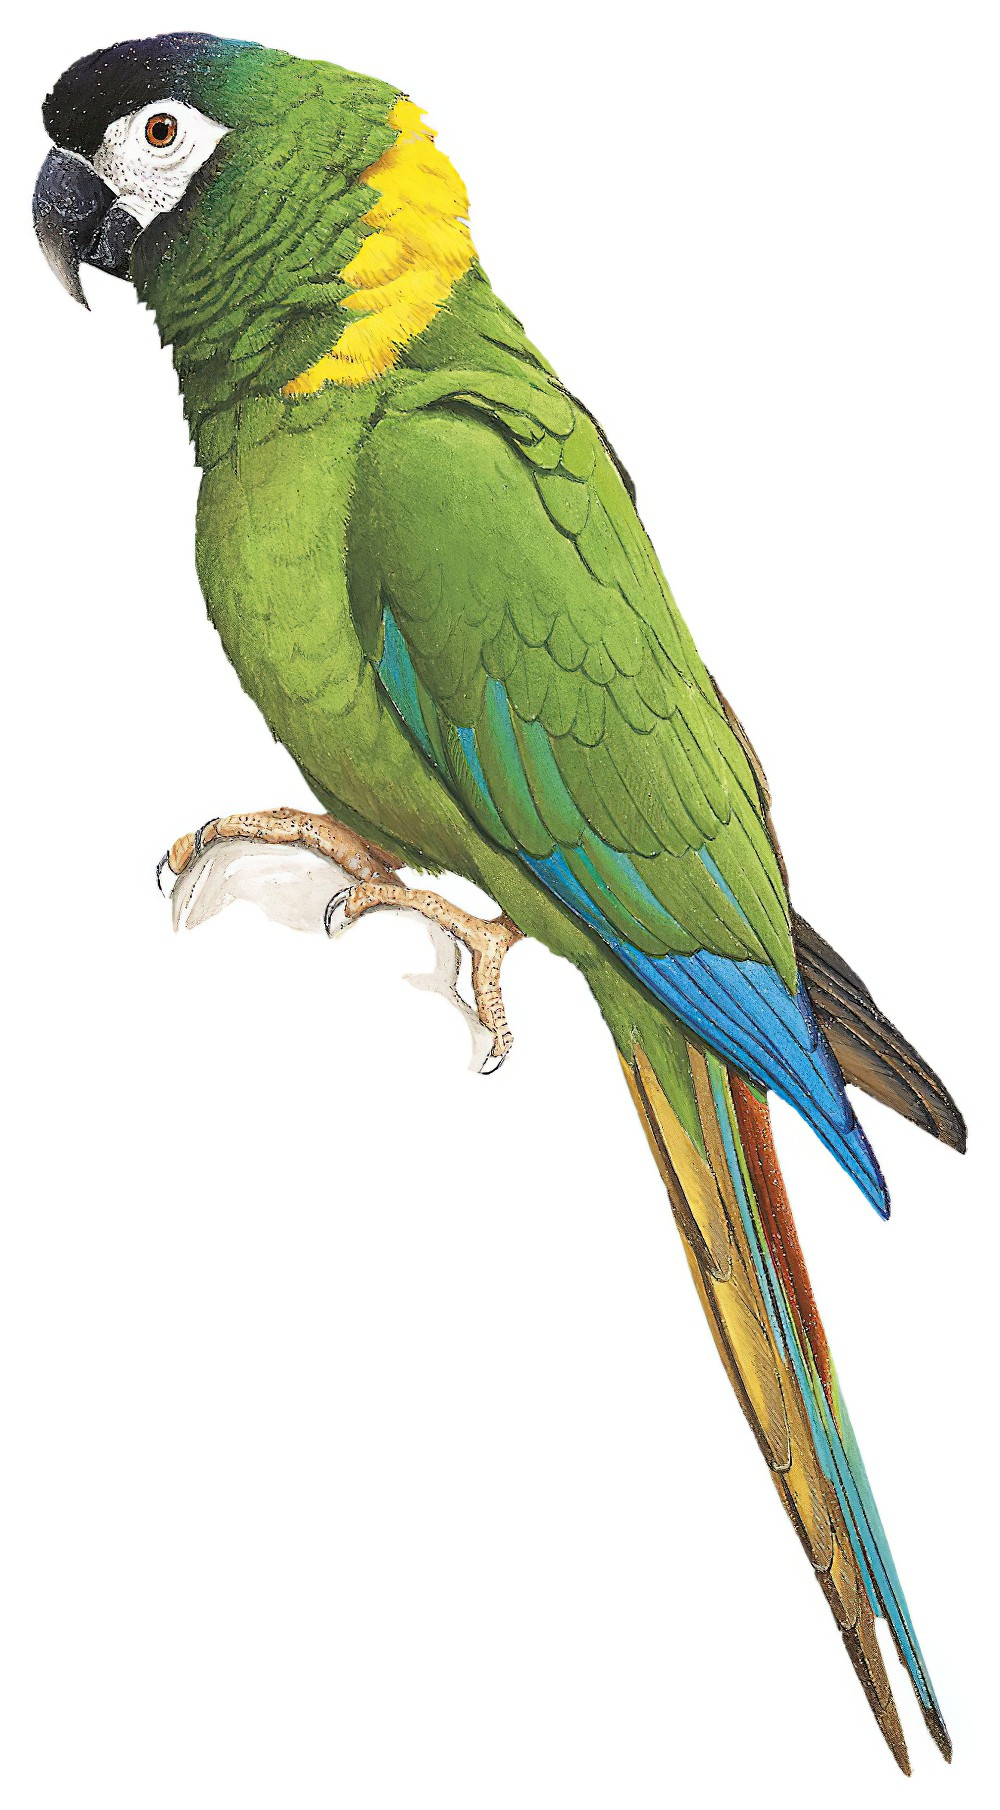 Yellow-collared Macaw / Primolius auricollis